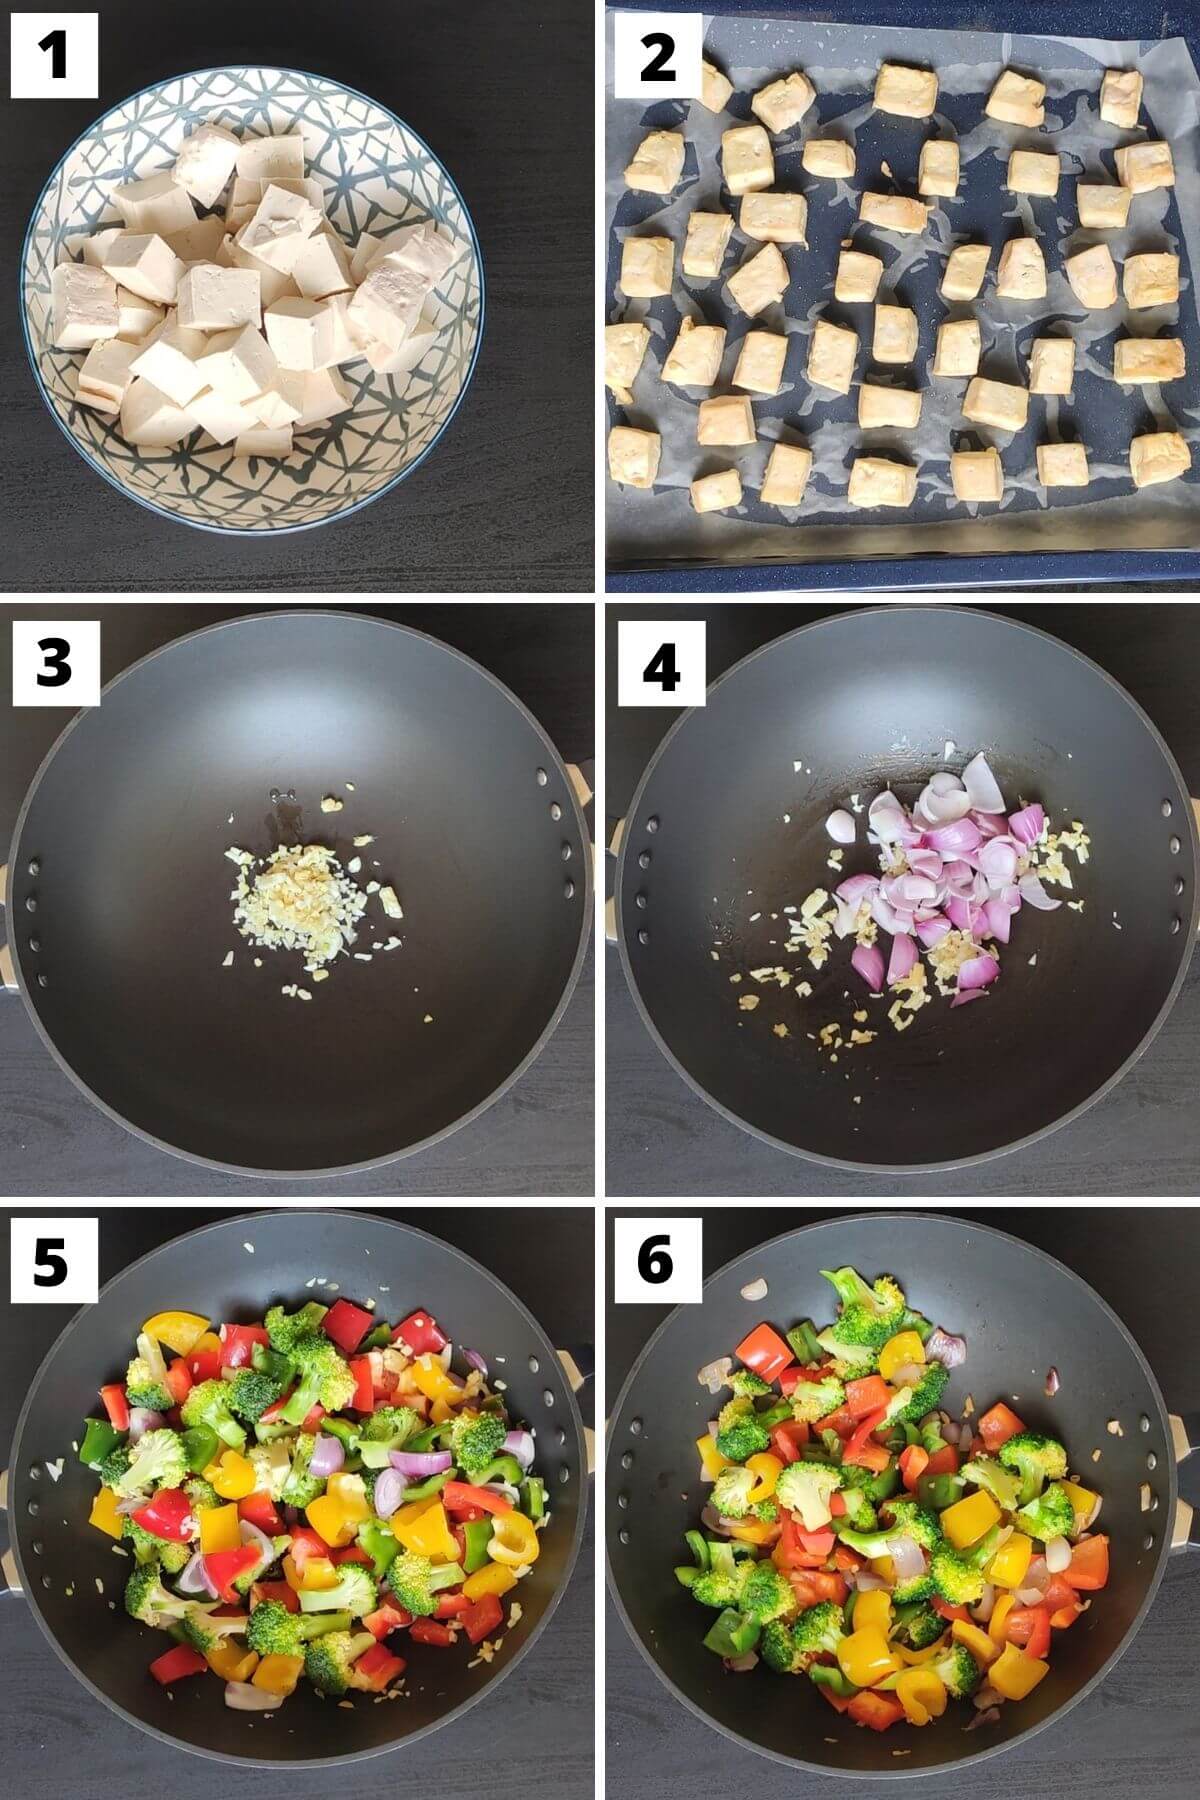 Steps to make sweet and sour tofu with broccoli